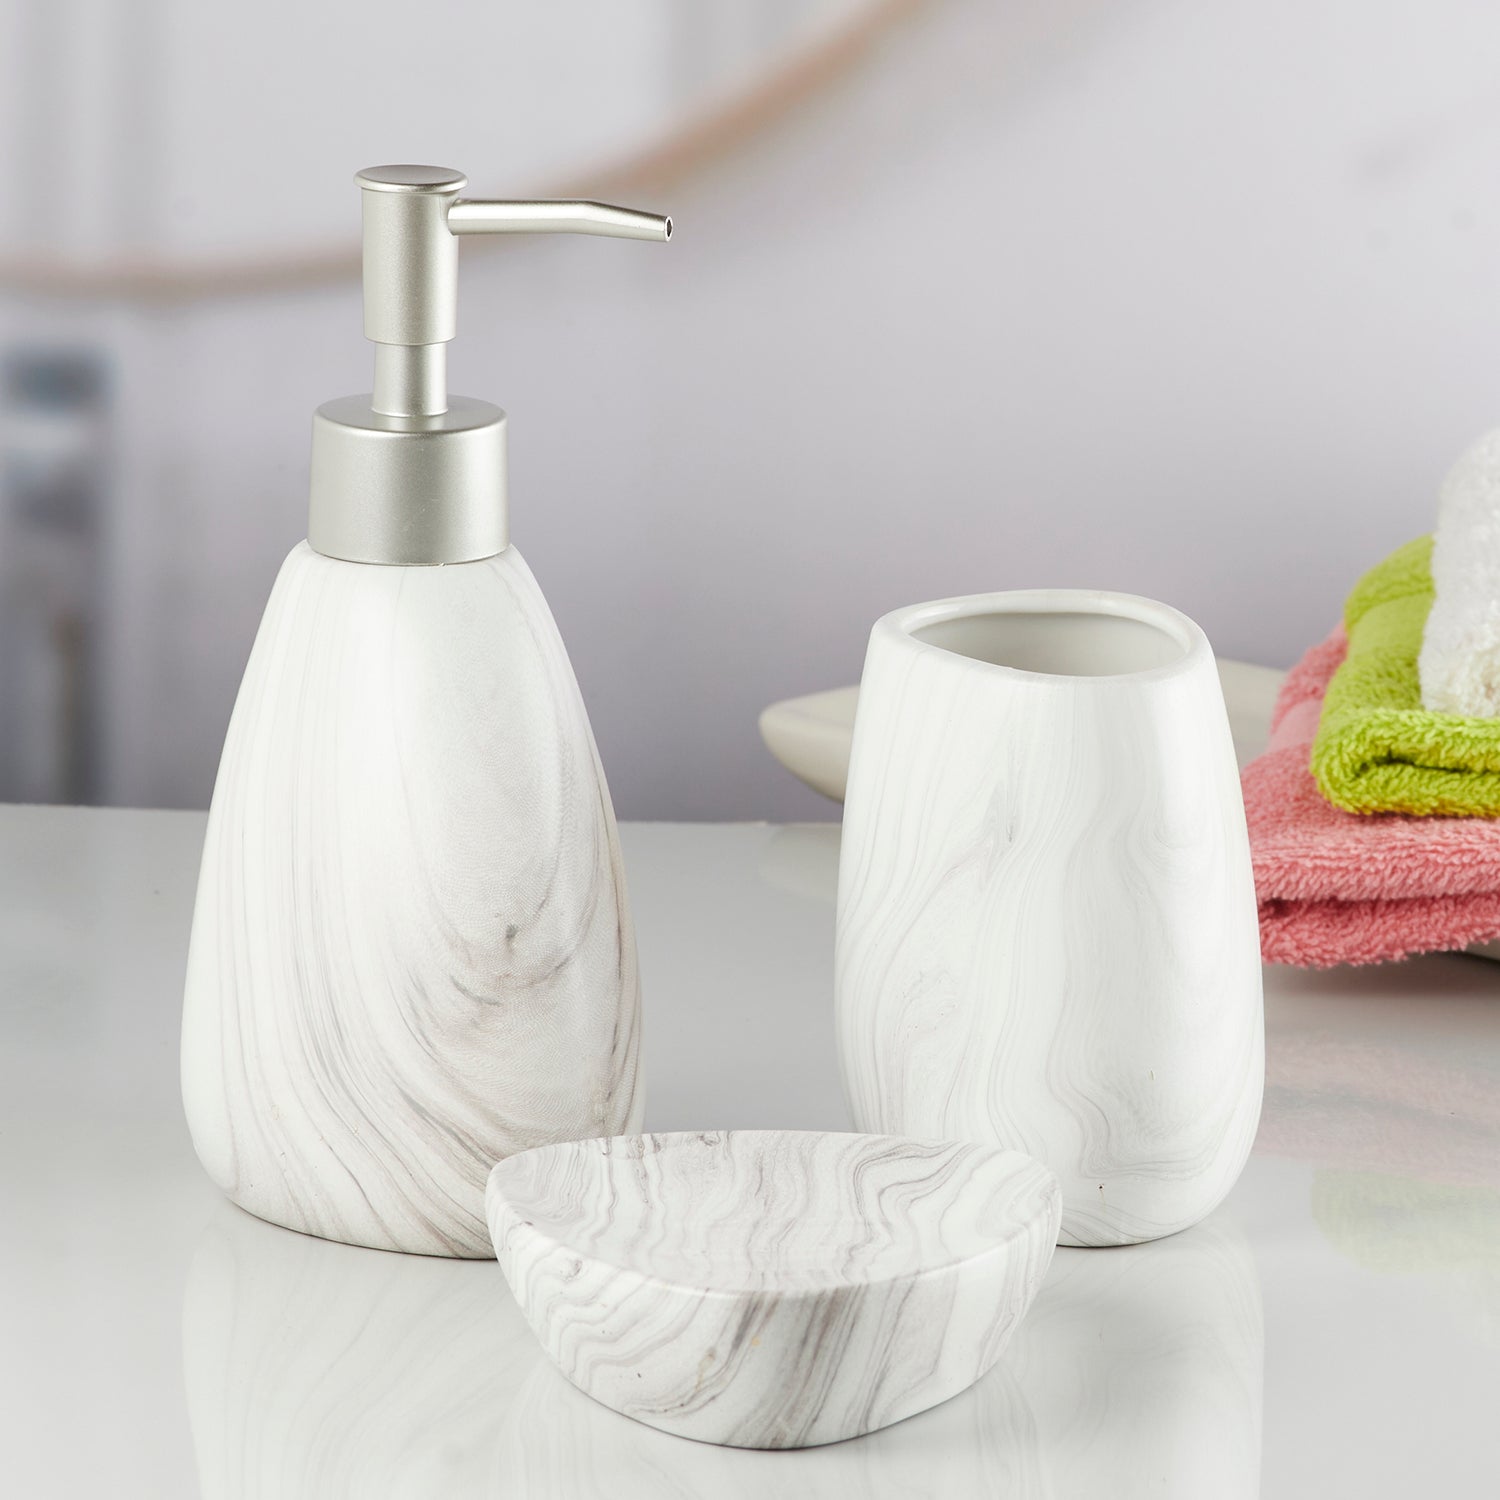 Ceramic Bathroom Accessories Set of 3 Bath Set with Soap Dispenser (9491)